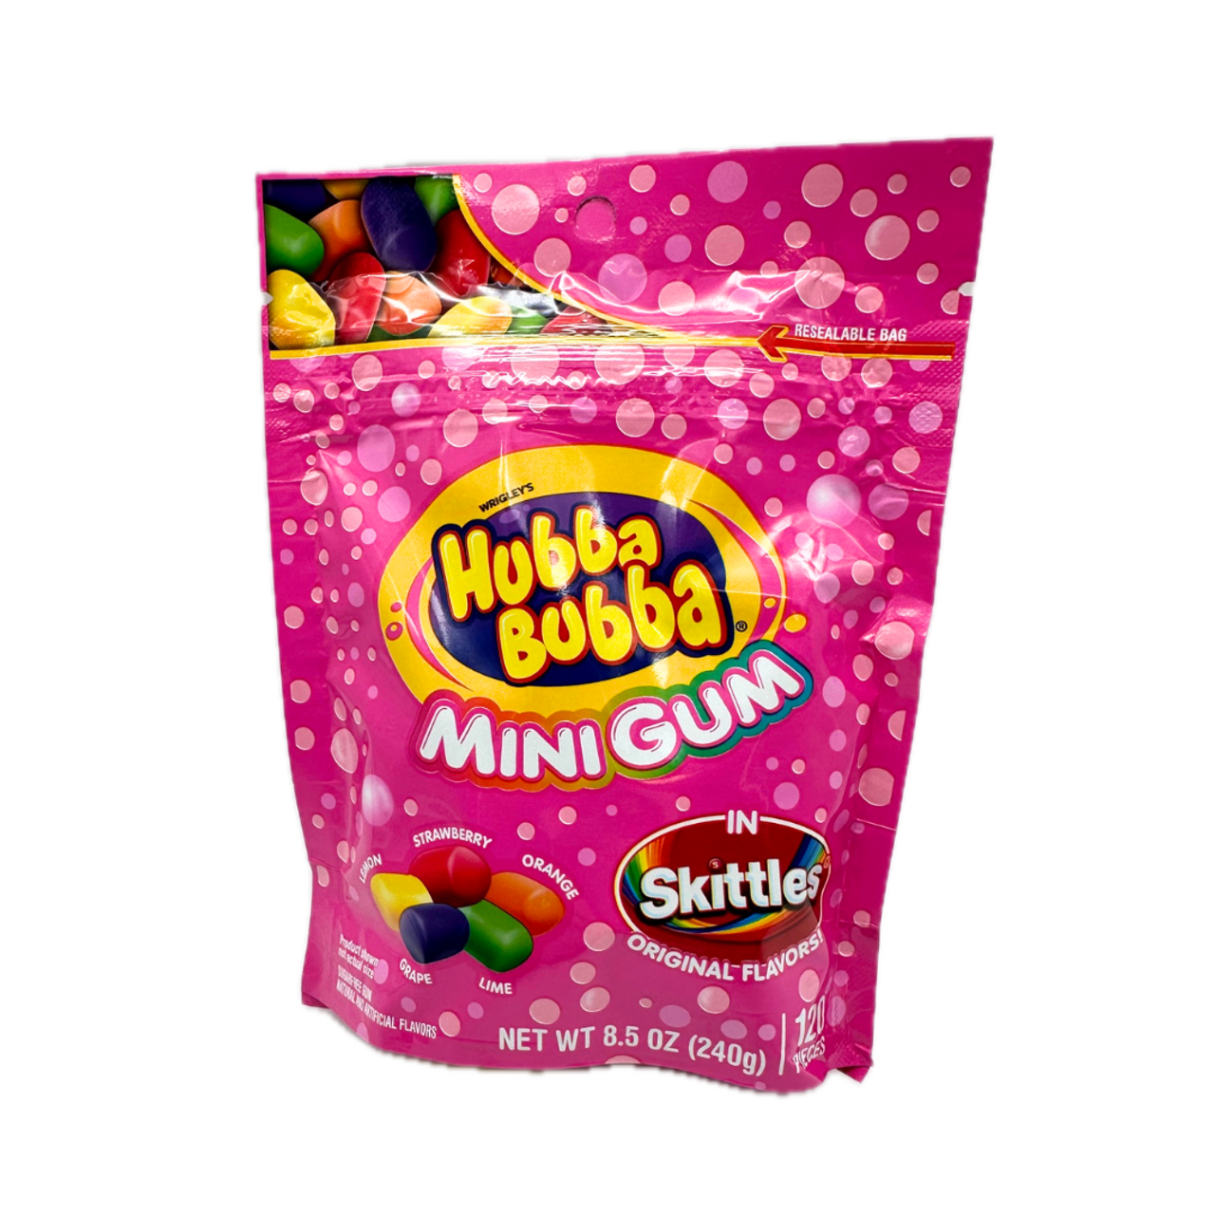 Hubba Bubba Skittles Mini Gum 8.5oz - 8ct